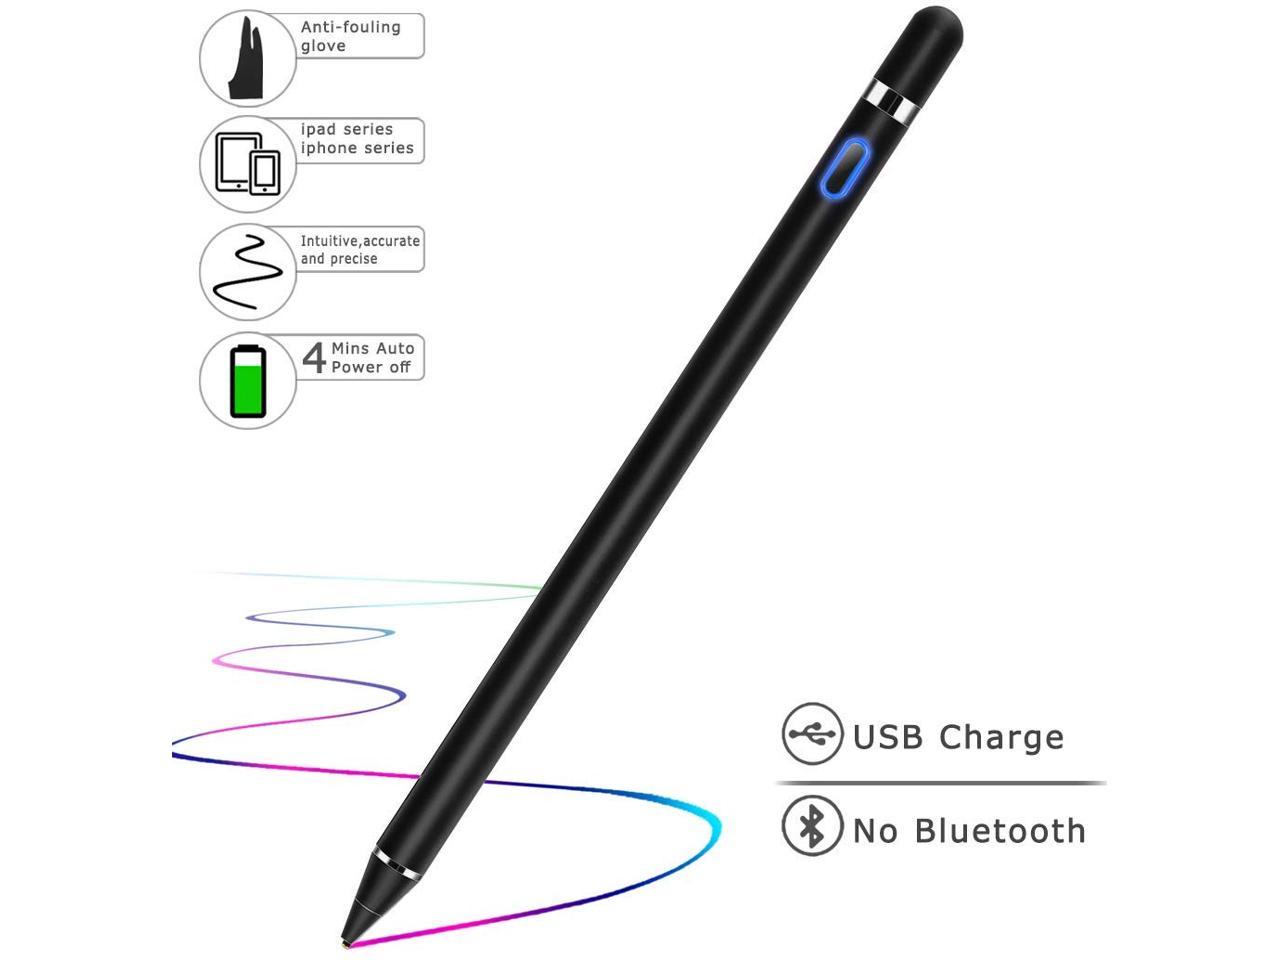 Lunar Blue Stylus Pen for vivo iQOO Neo 5 Stylus Pen by BoxWave - FineTouch Capacitive Stylus Super Precise Stylus Pen for vivo iQOO Neo 5